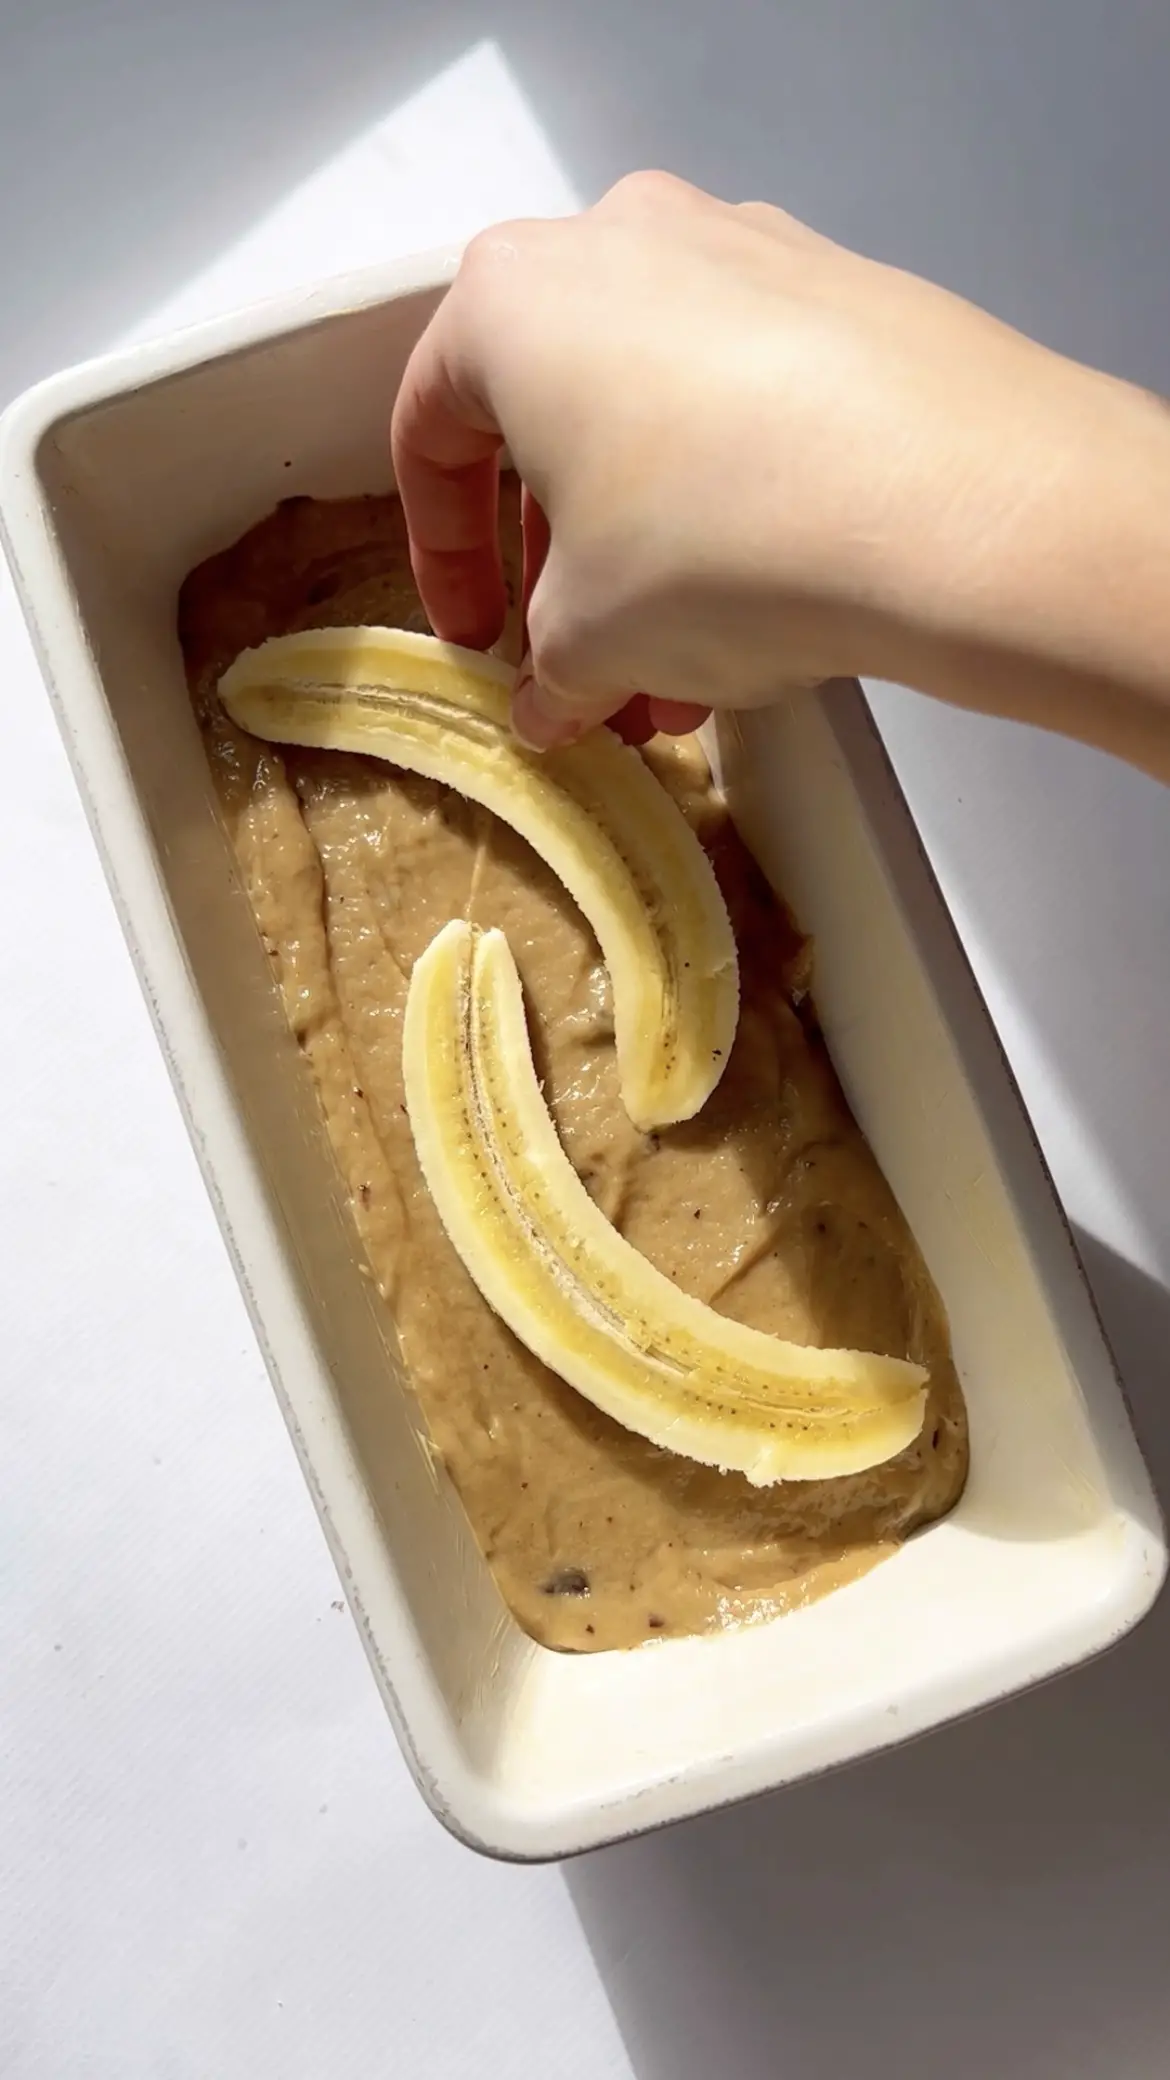 adding banana to the banana bread